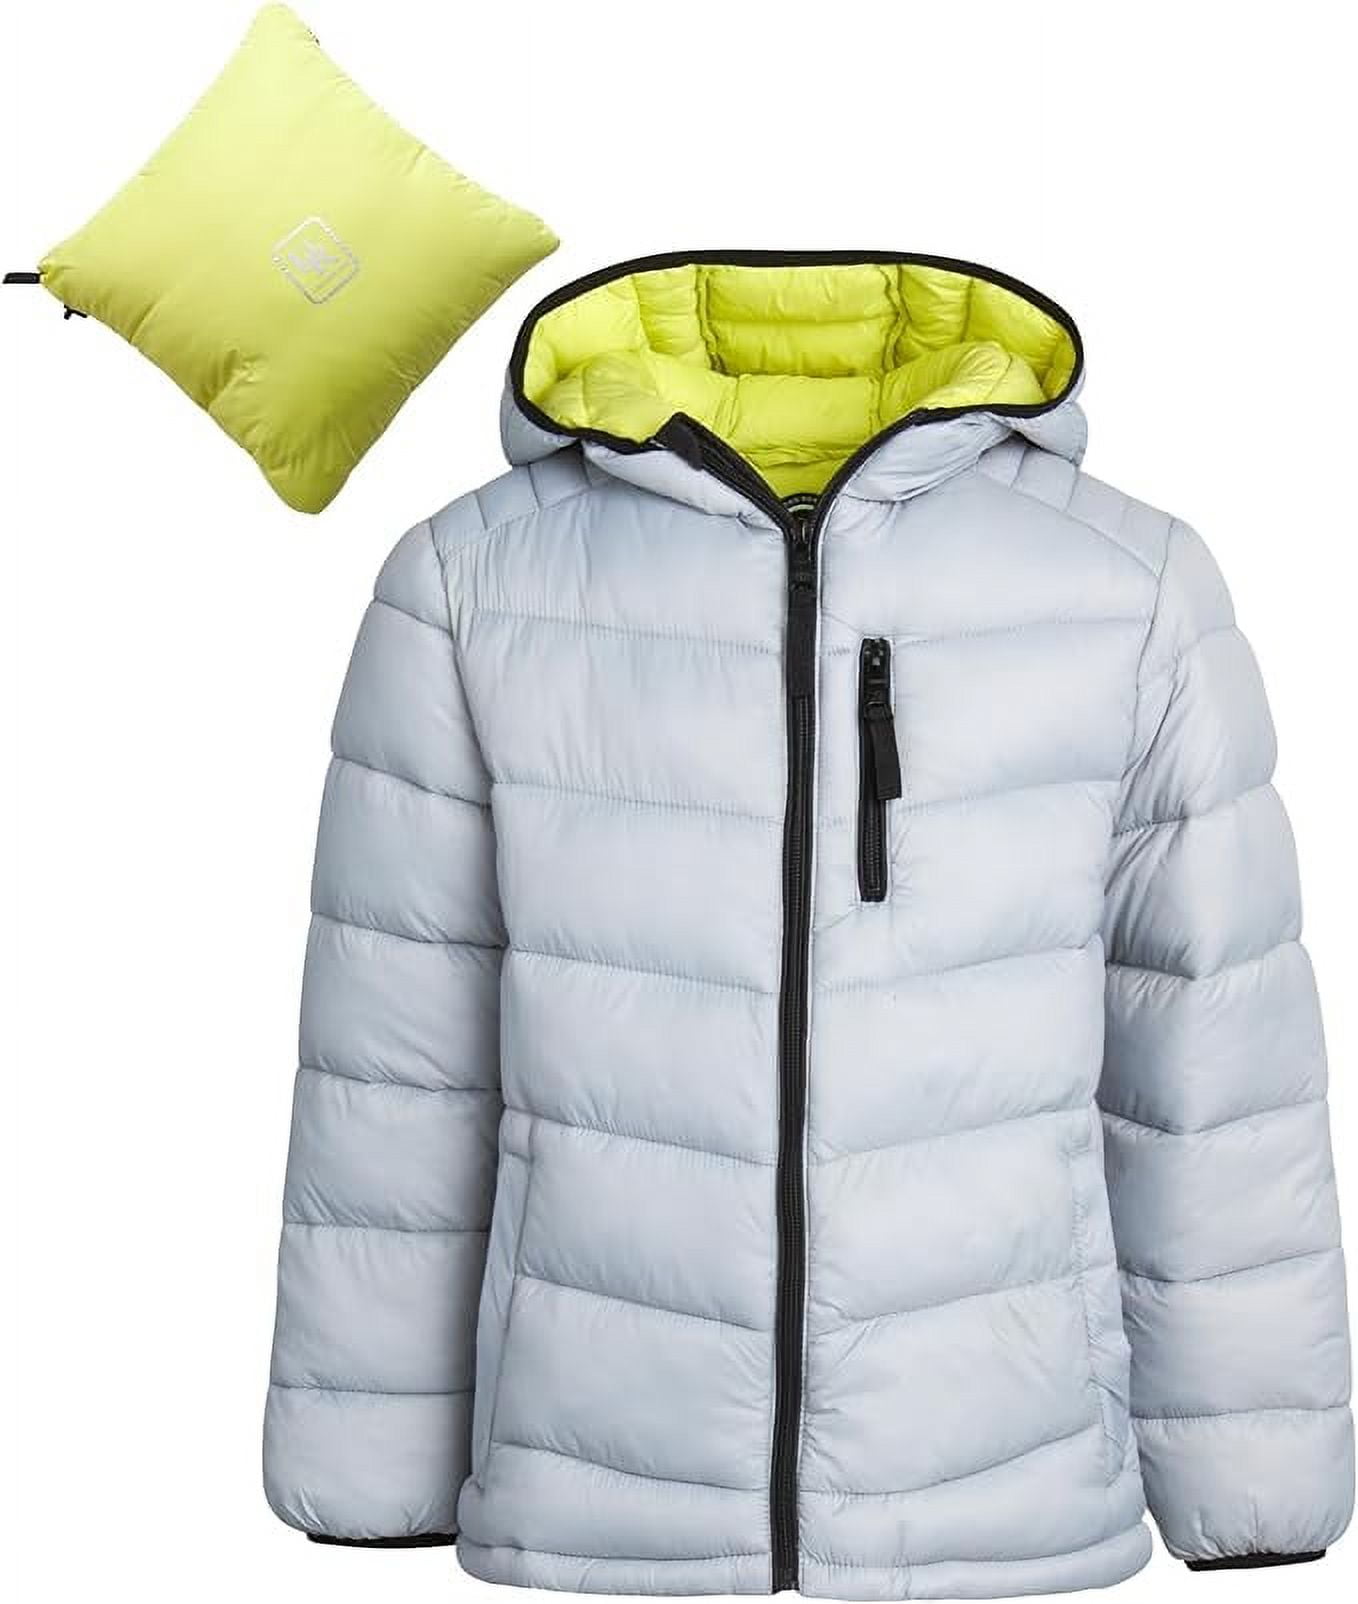 URBAN REPUBLIC Boys’ Foldable Hooded Jacket – Insulated Weather ...